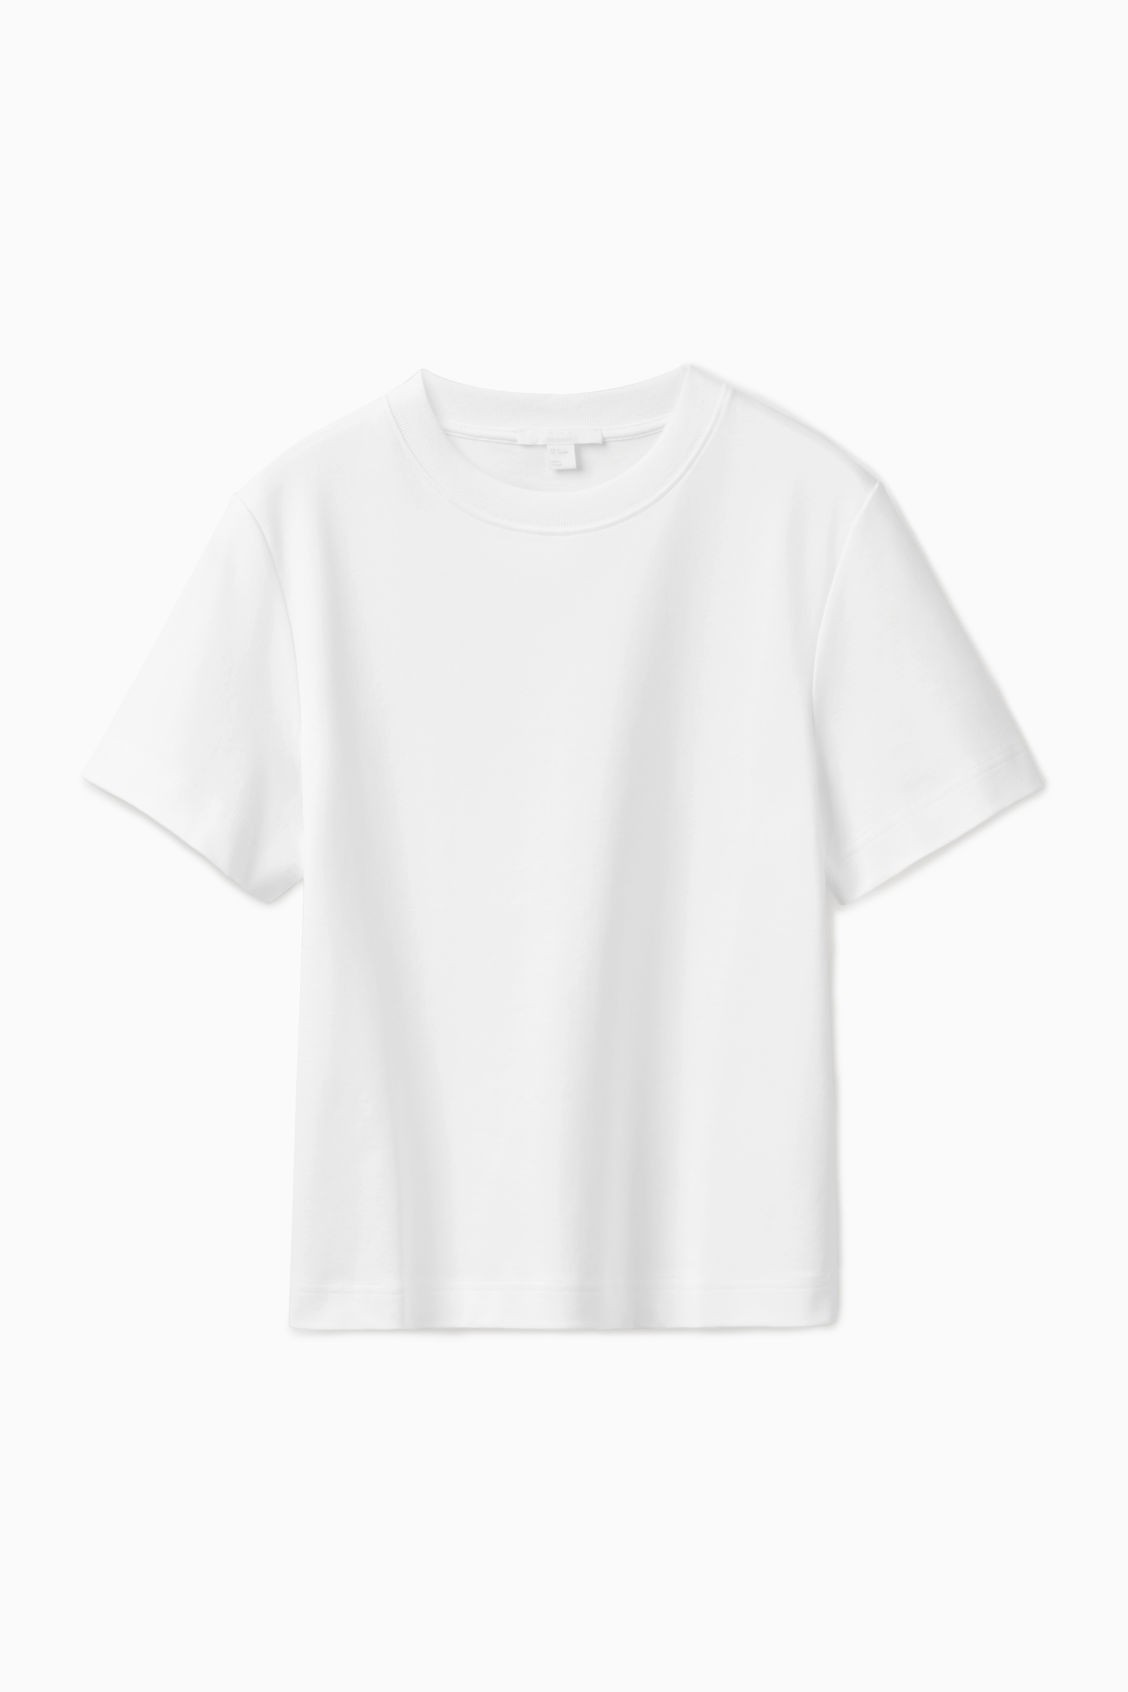 COS %100 Pamuk Tshirt